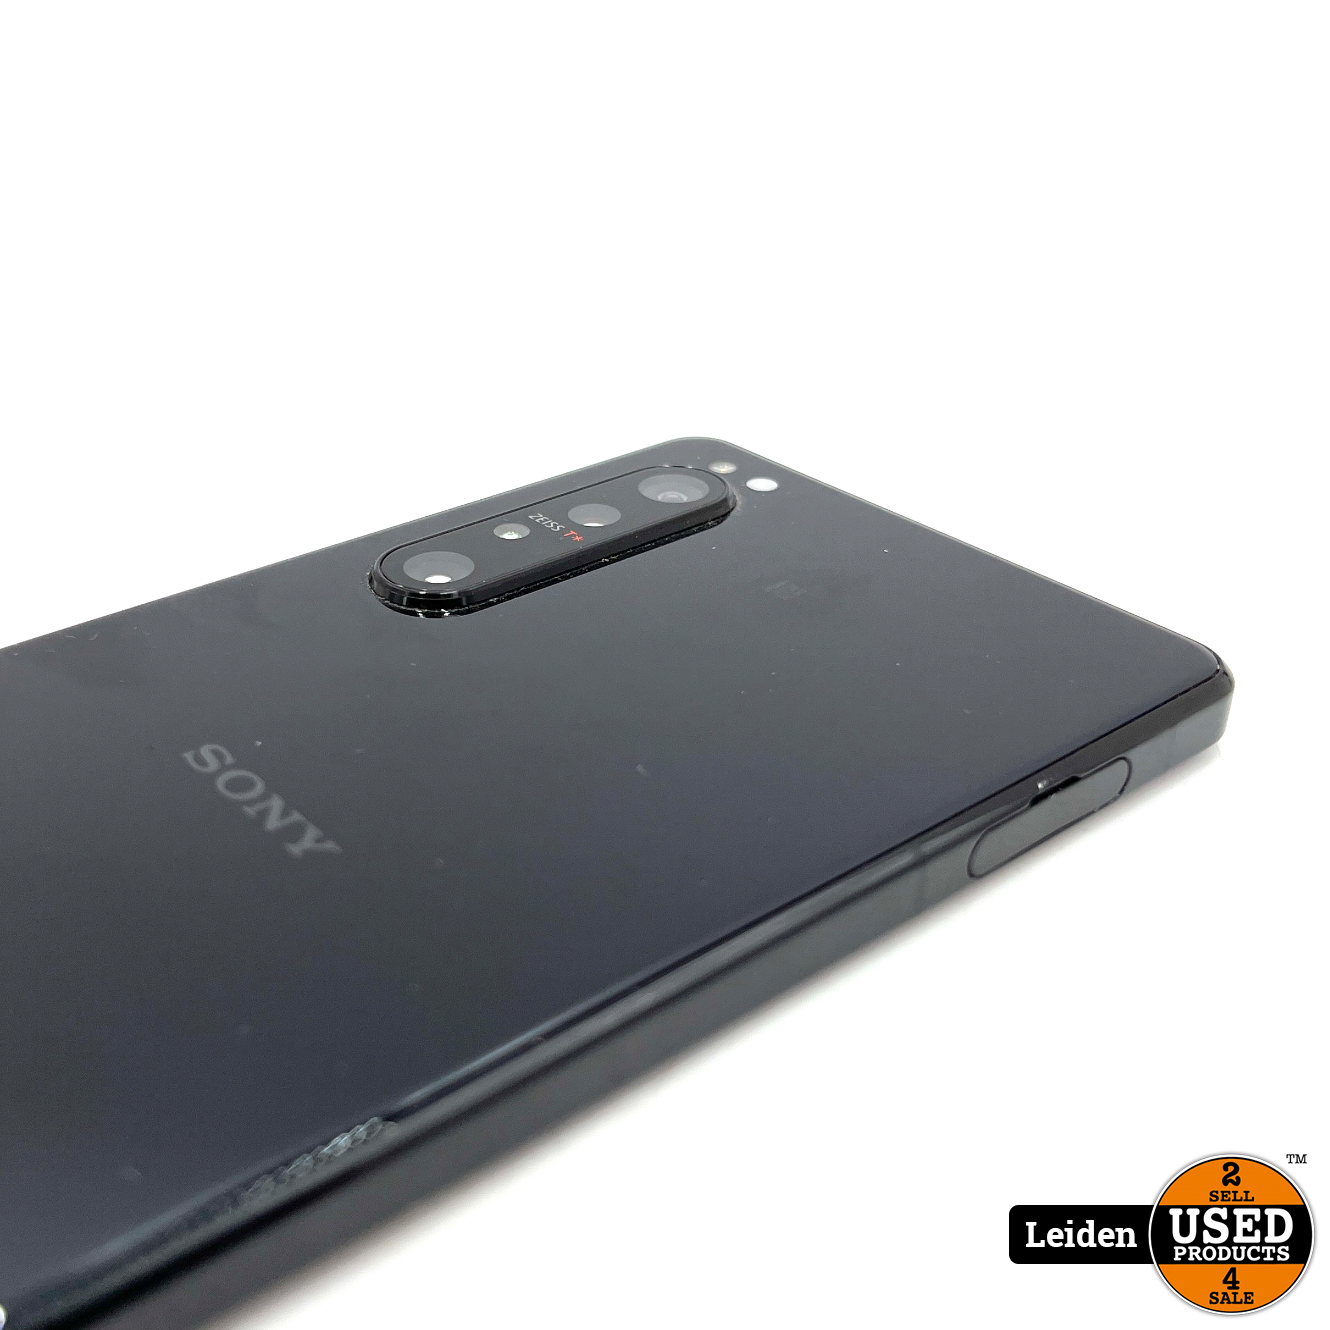 Deuk pols rijst Sony Xperia 1 II 5G 256GB - Zwart - Used Products Leiden